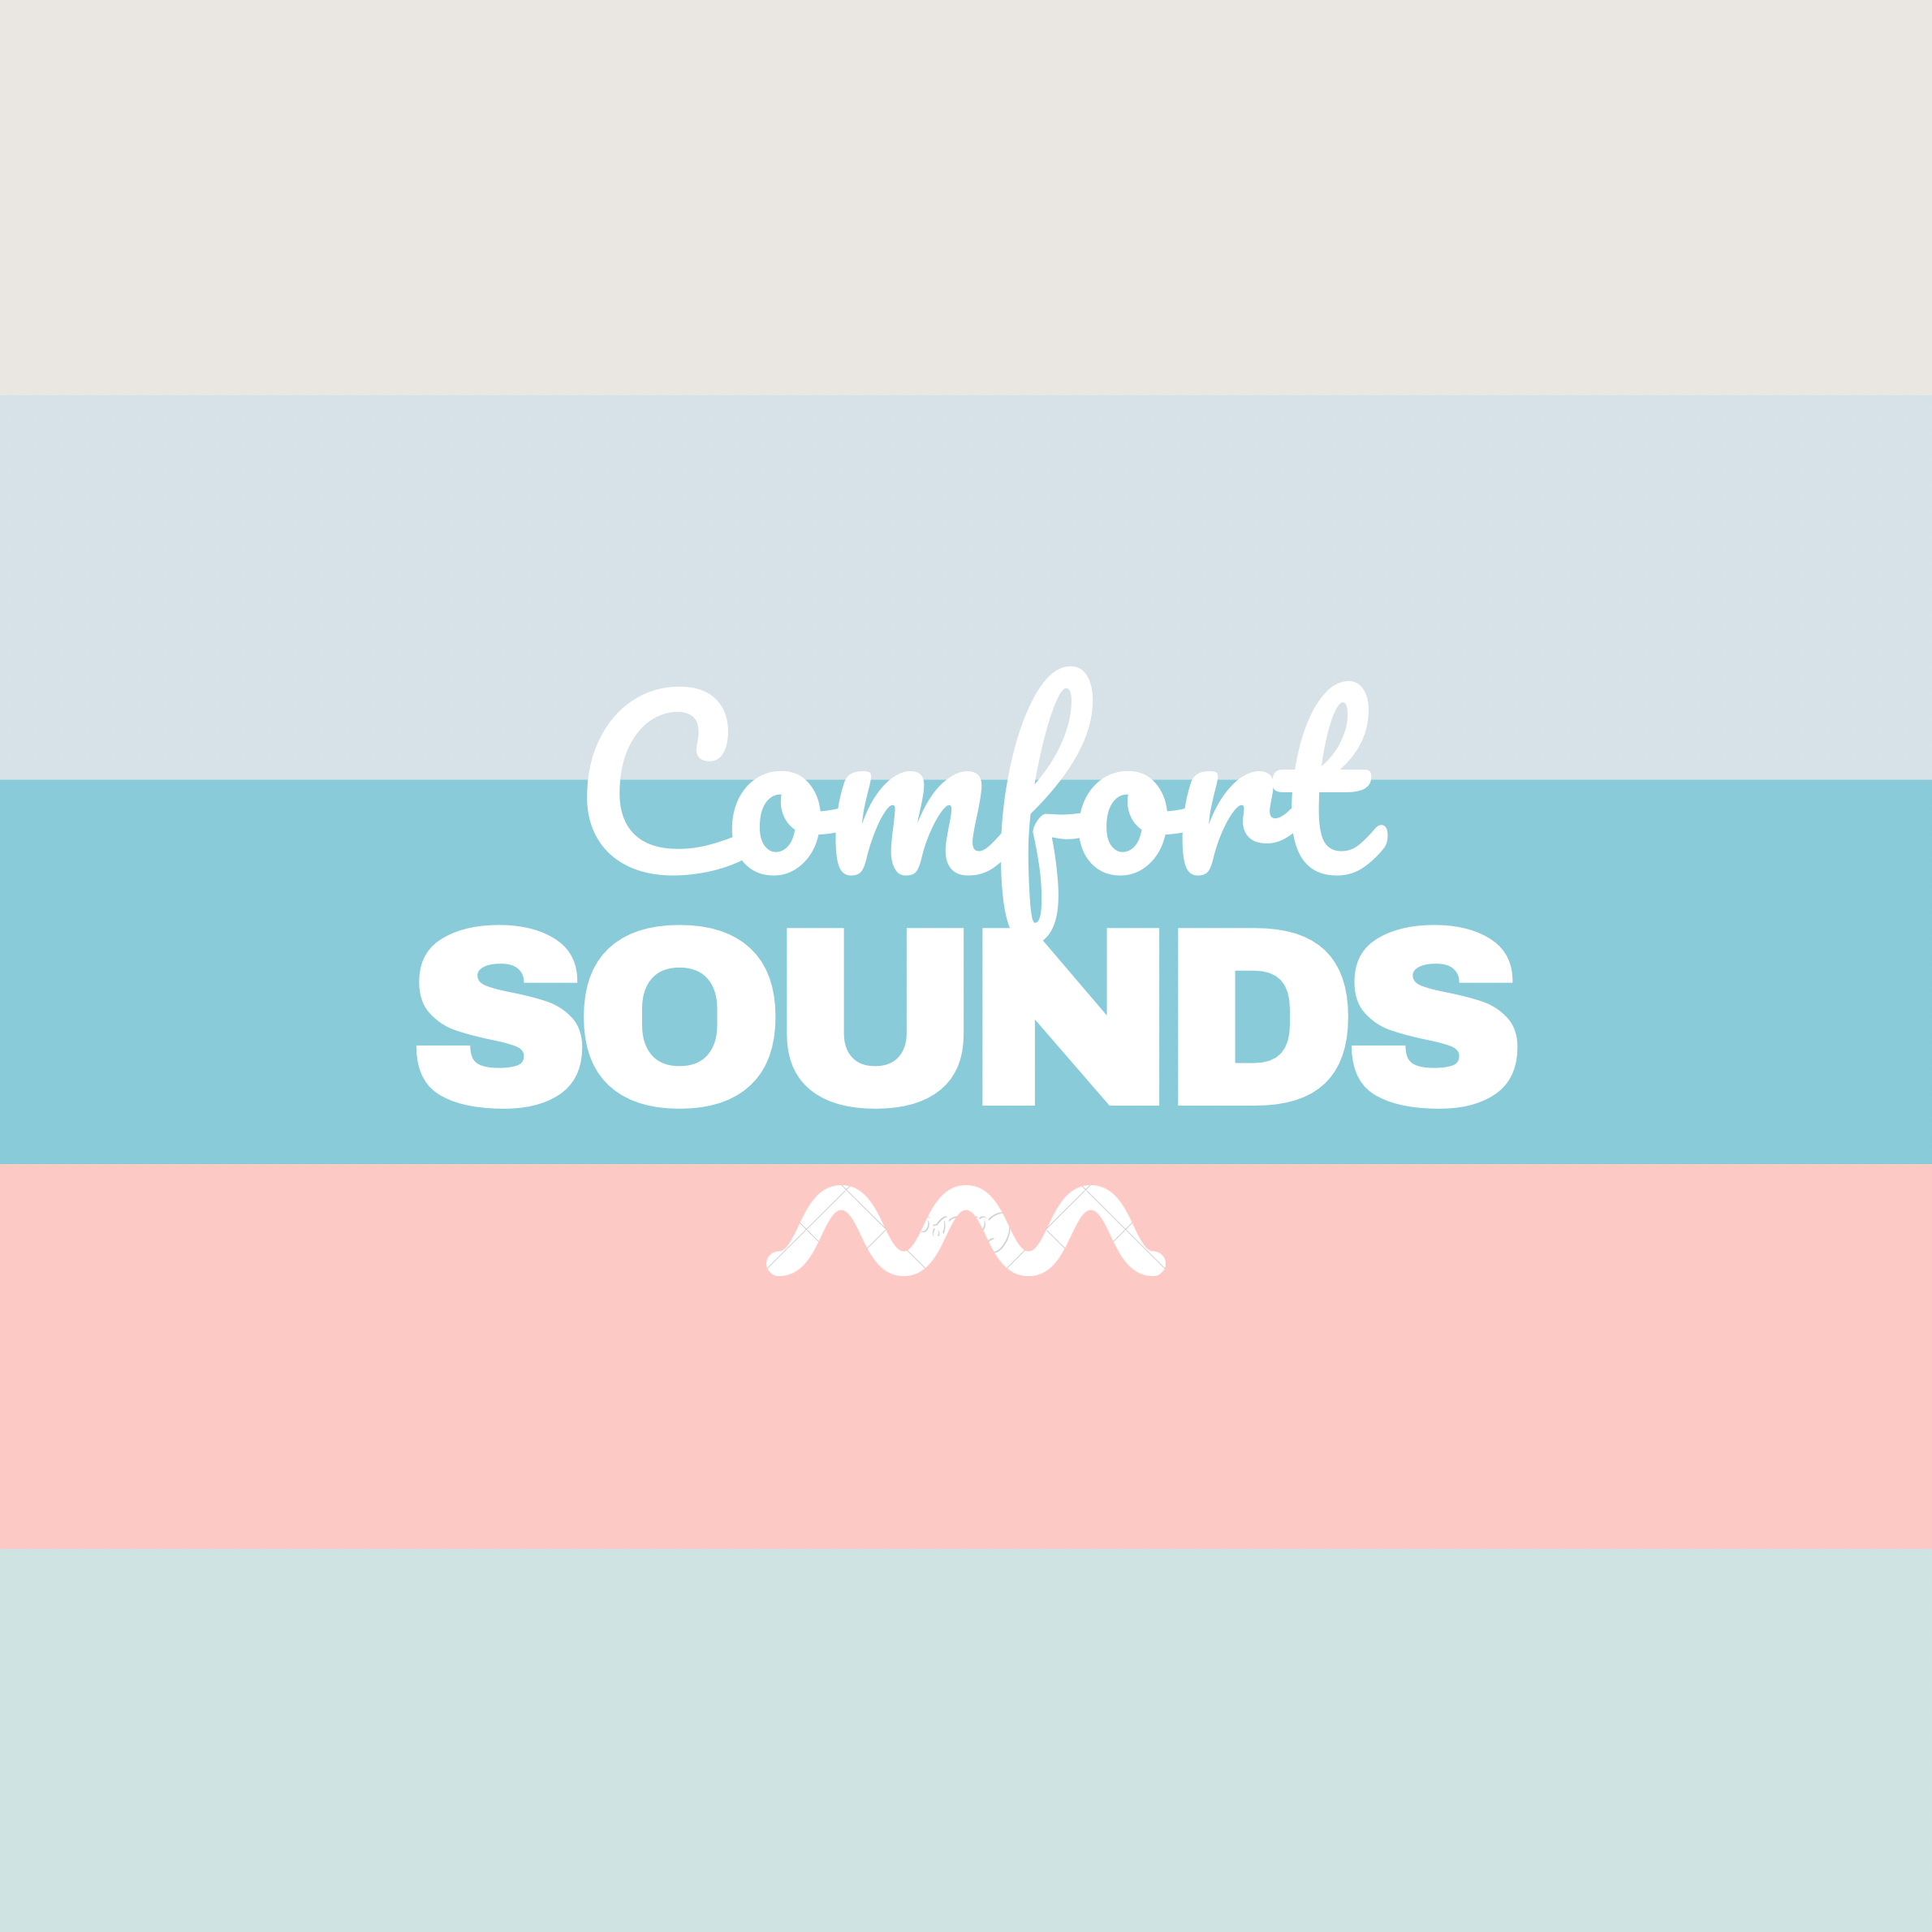 Comfort sounds logo